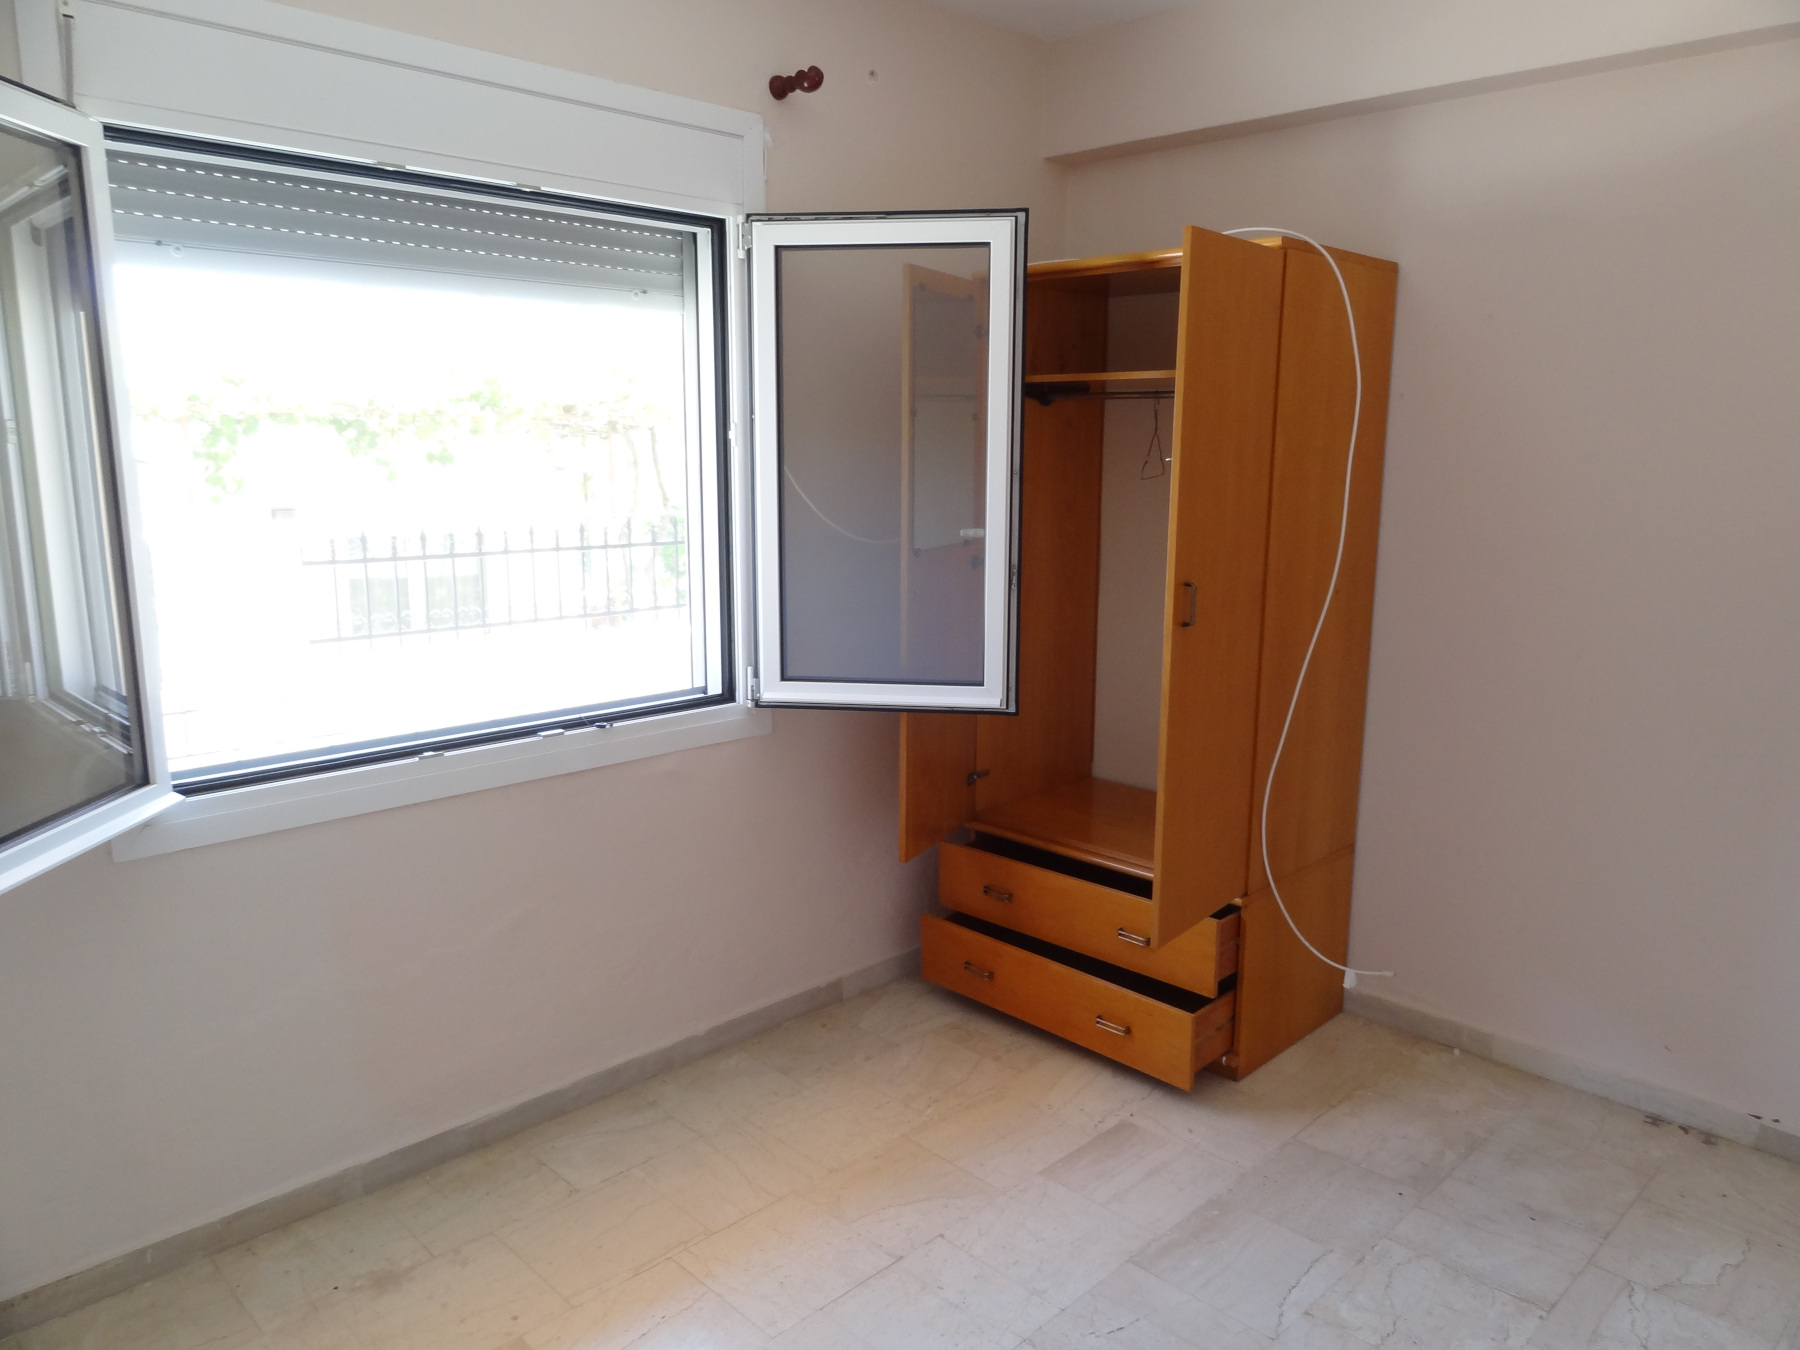 Two-room ground floor studio for rent, 38 sq.m. in Kiafa in Ioannina